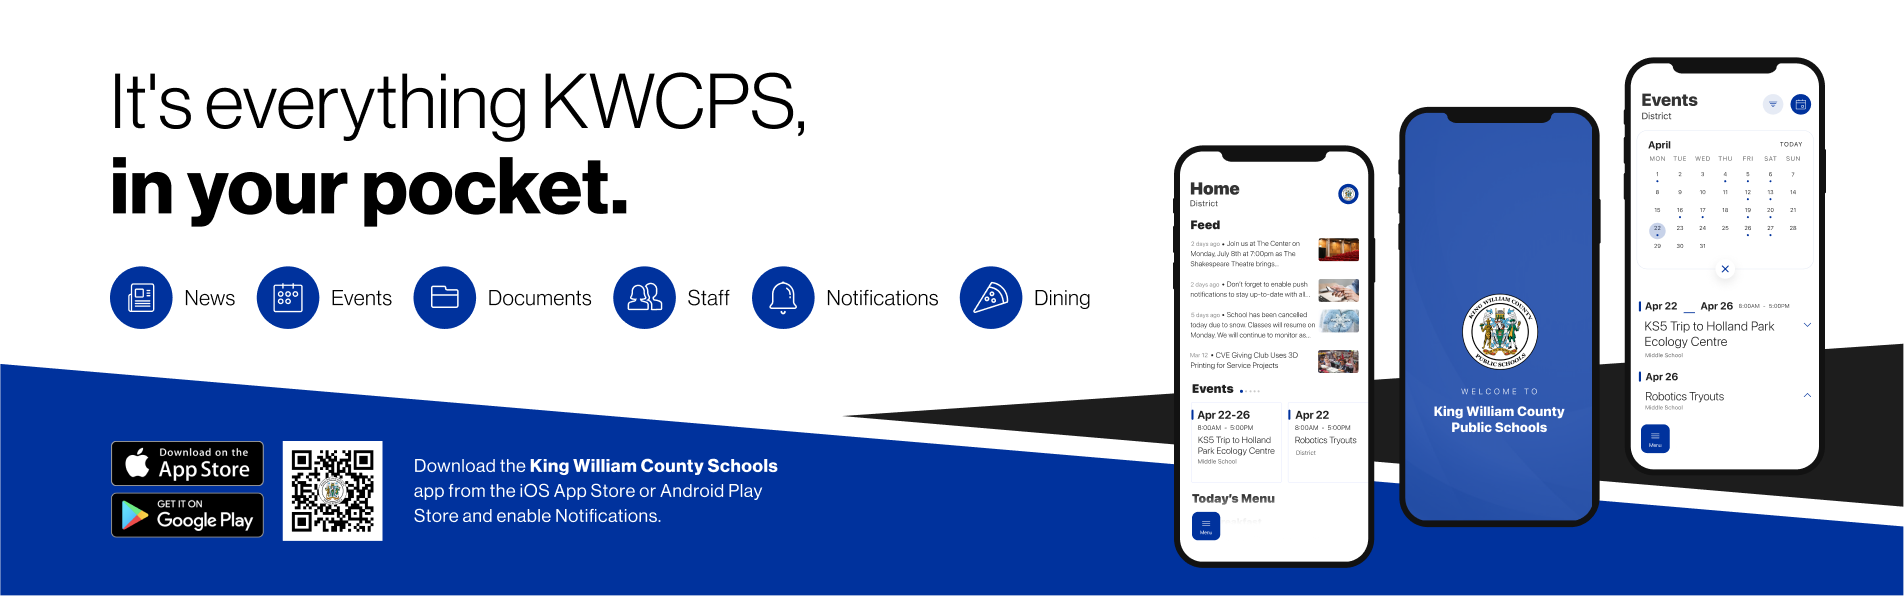 KWCPS App Information